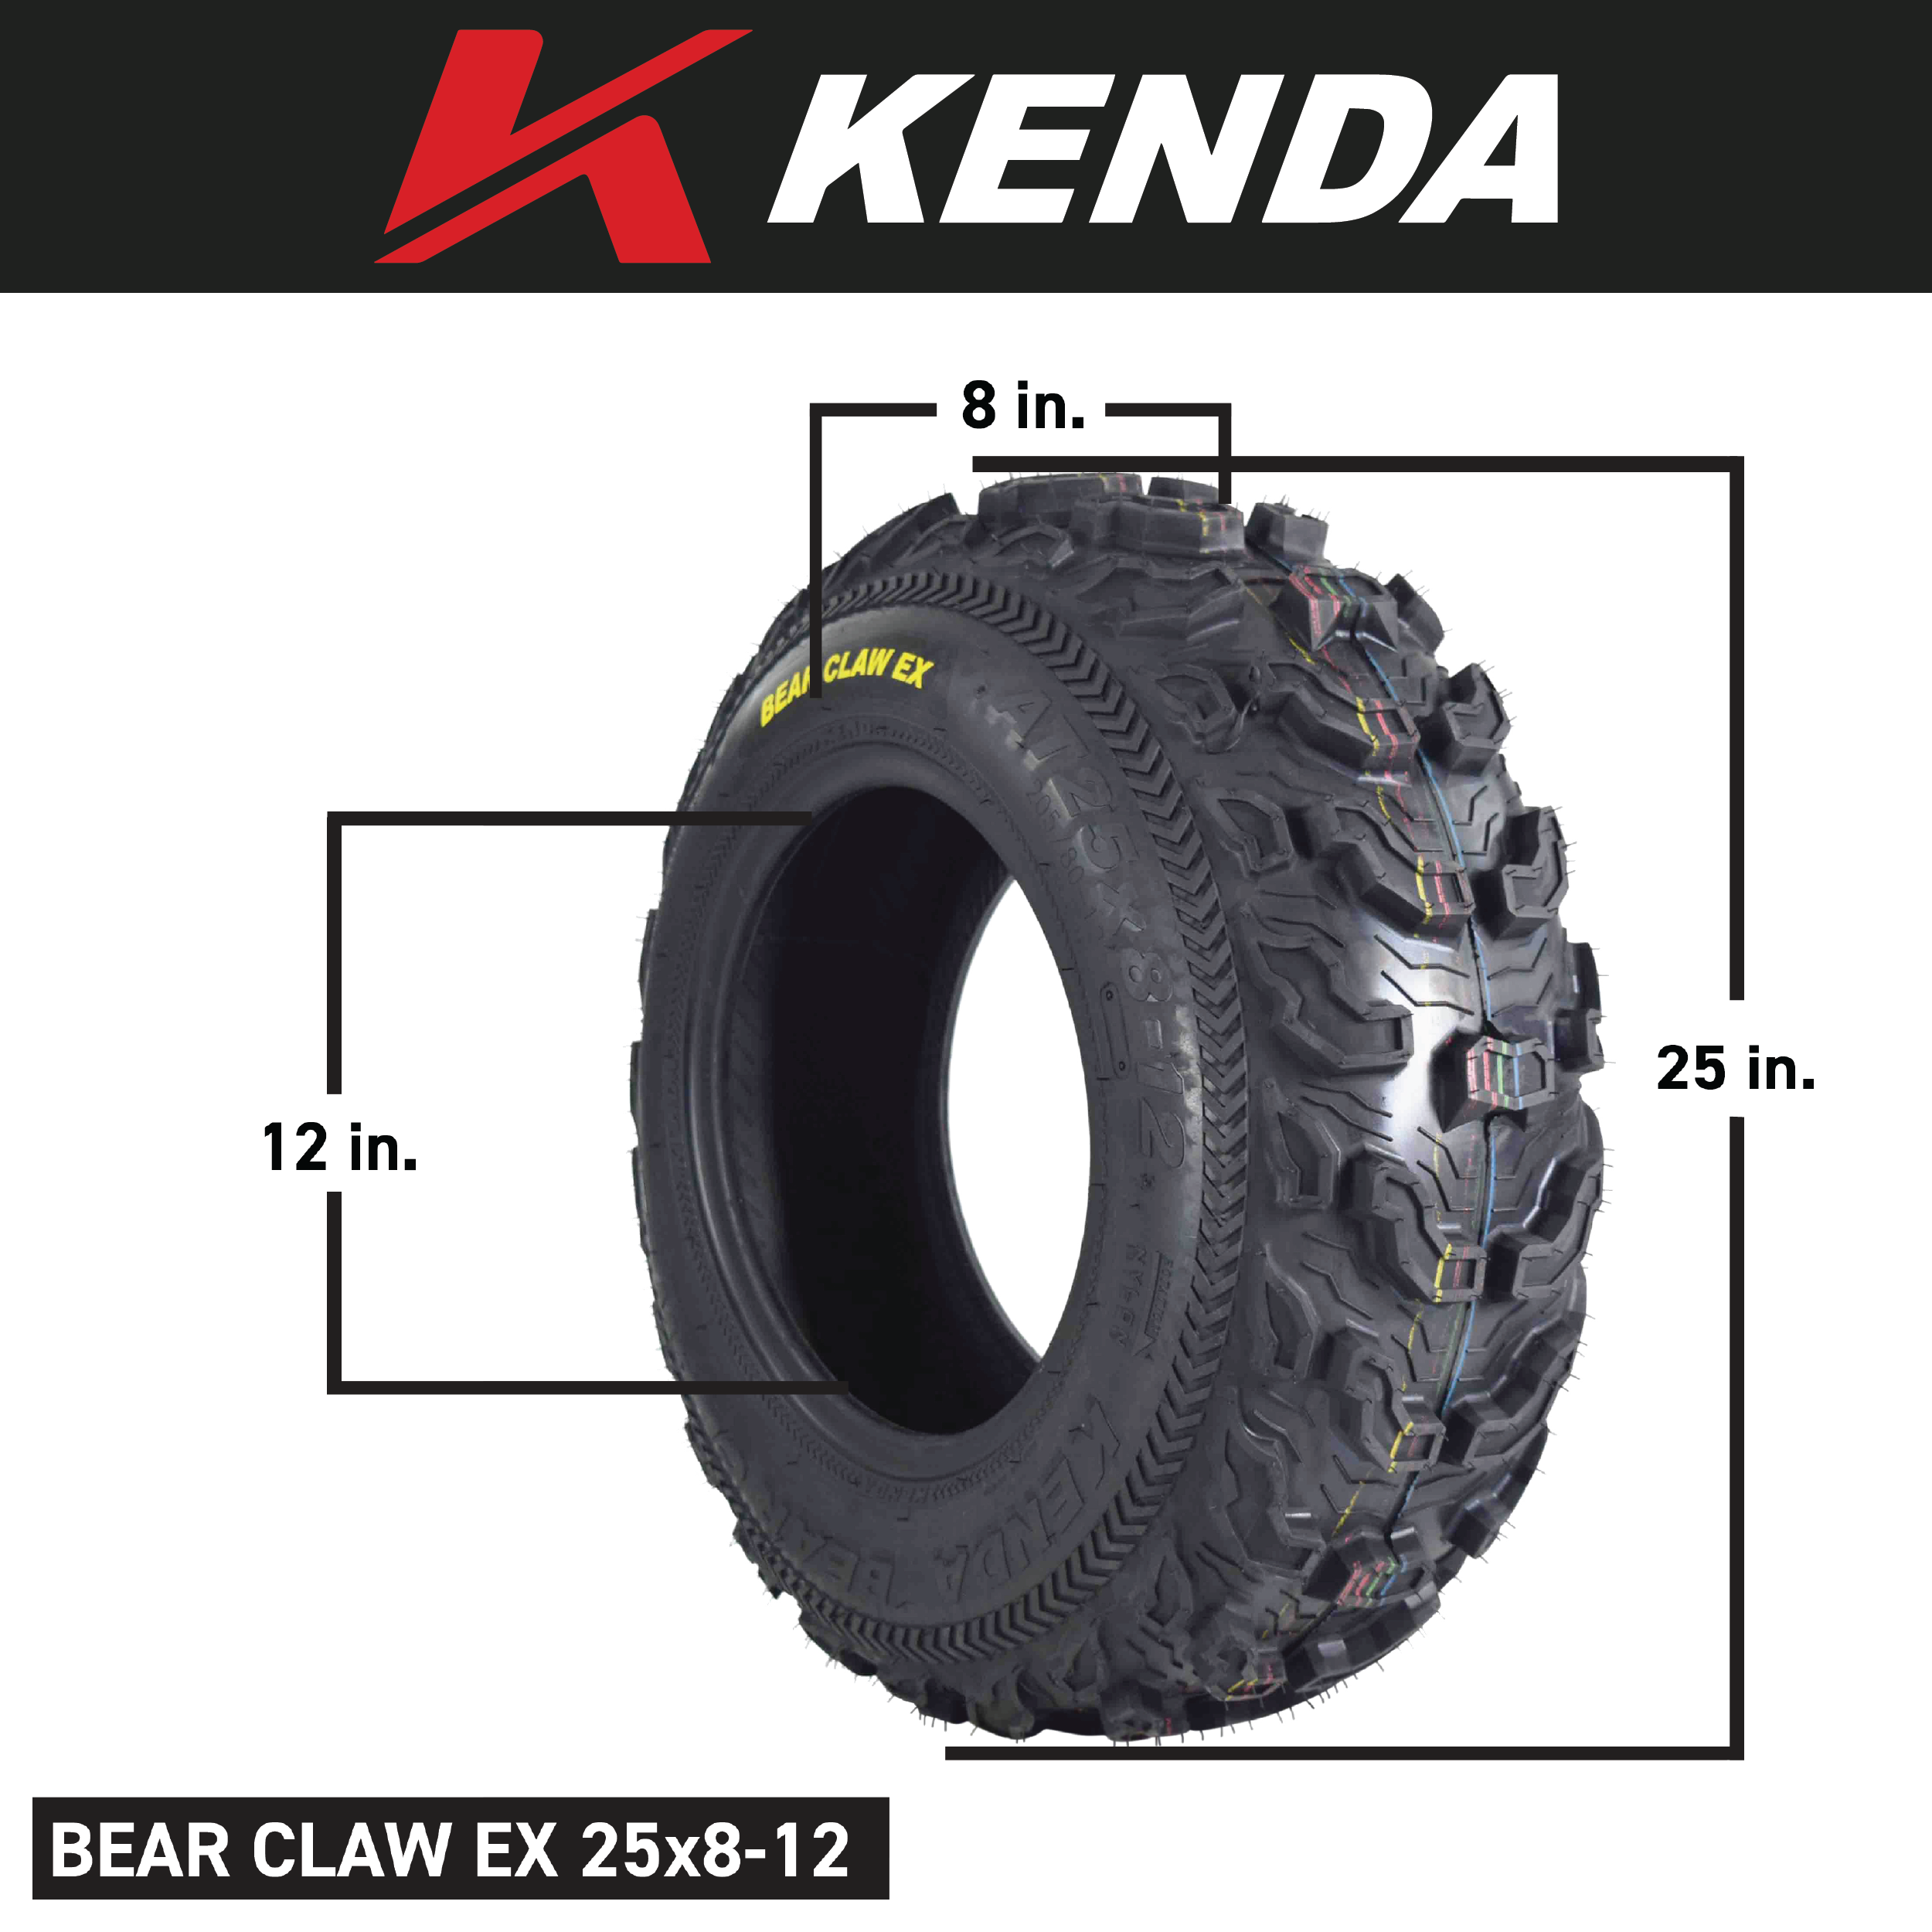 Kenda Bear Claw EX 25x8-12 F 25x10-12 R ATV 6 PLY Tires Bearclaw - 4 Pack Set